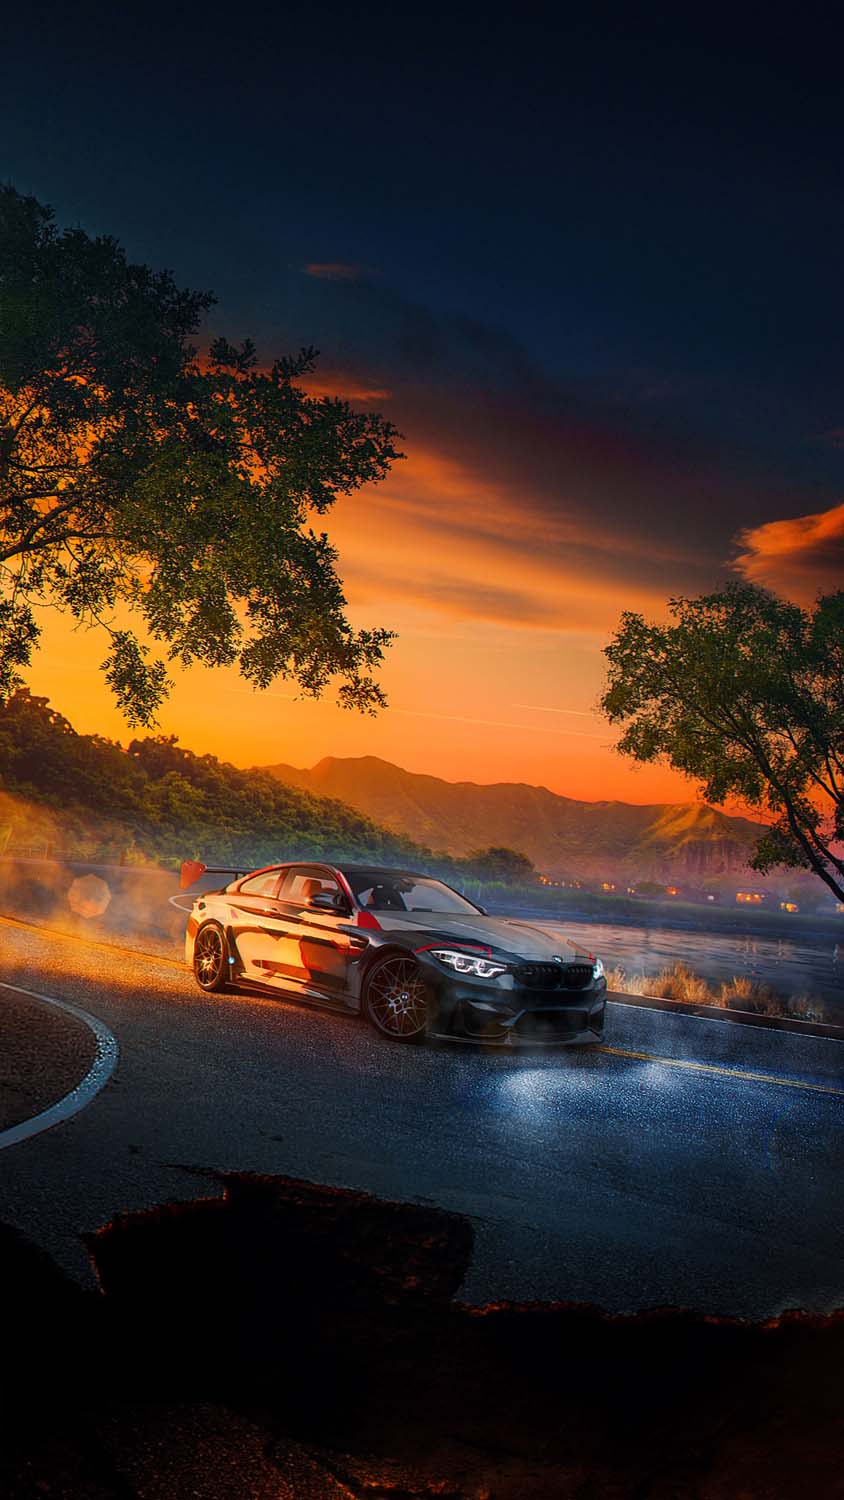 BMW Sunset Drive iPhone Wallpaper HD